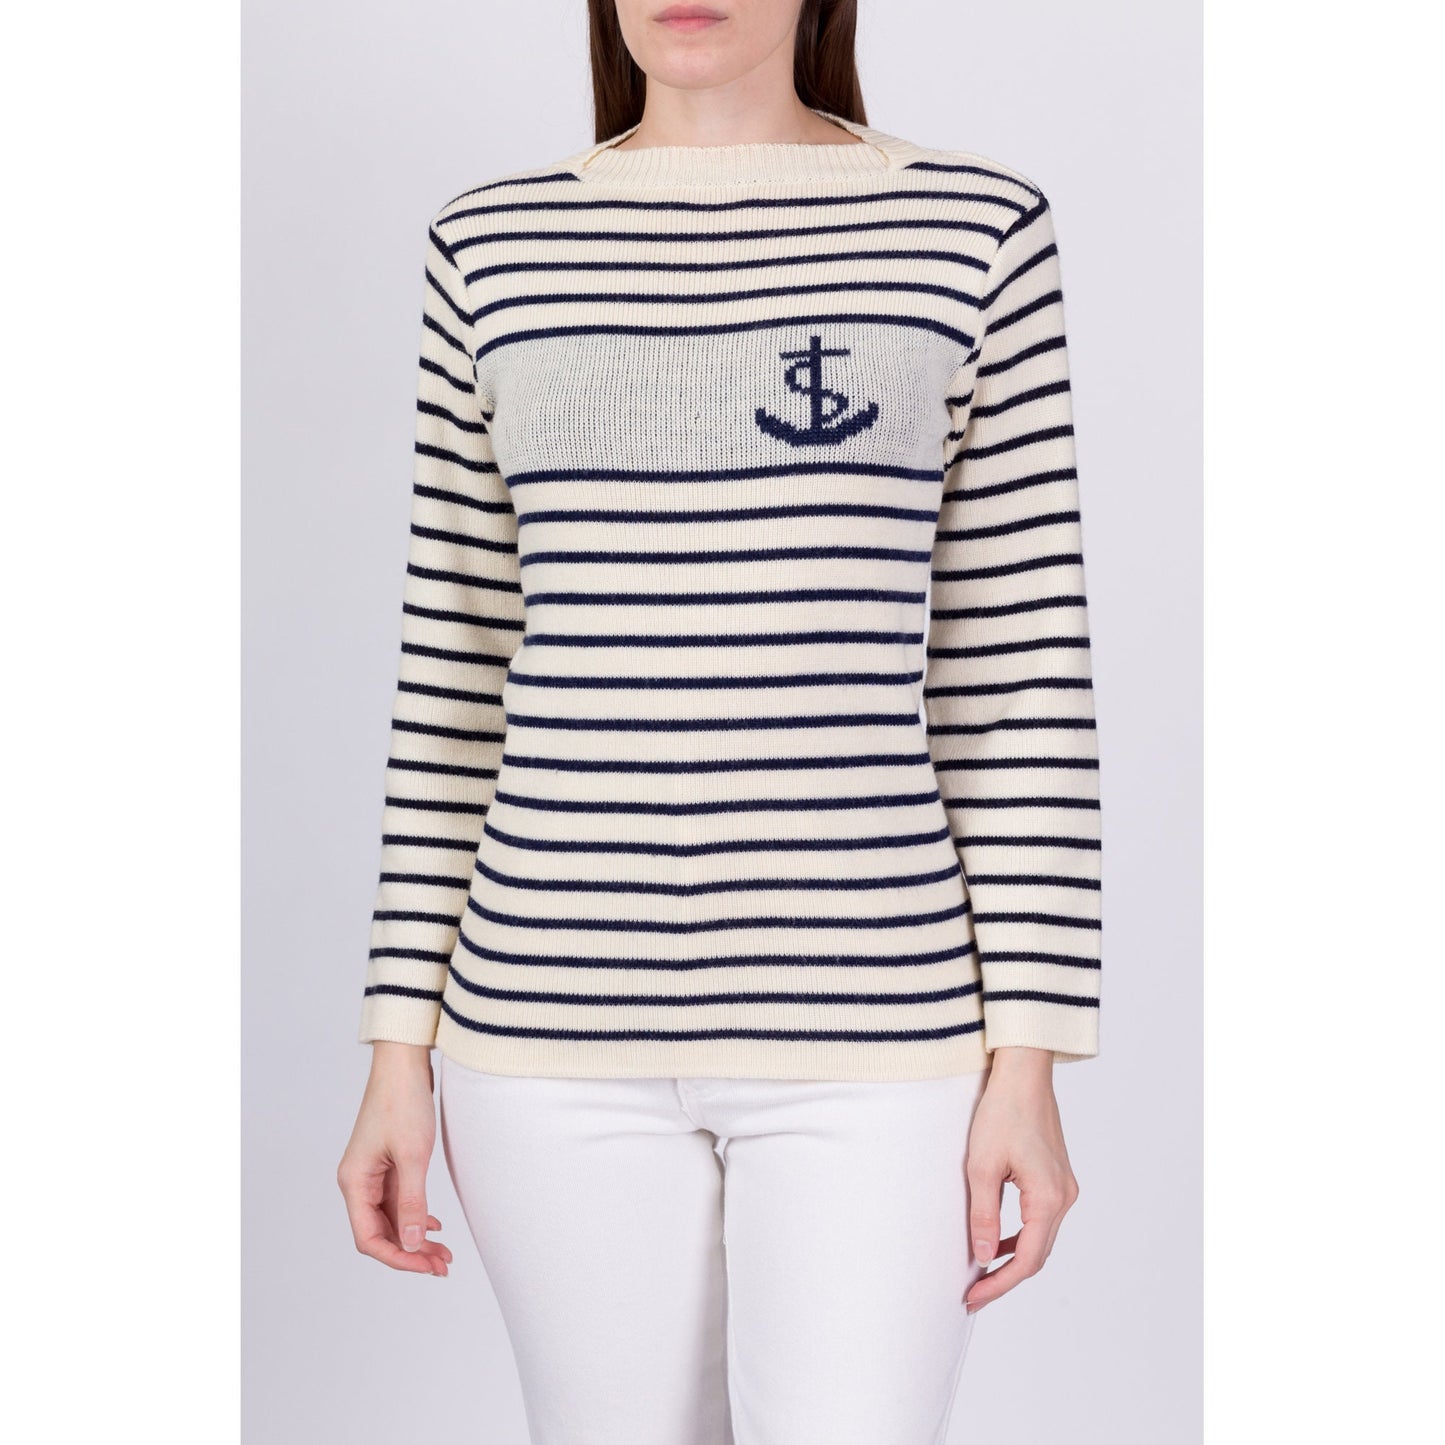 Vintage Breton Sailor Striped Boat Neck Sweater - Small 